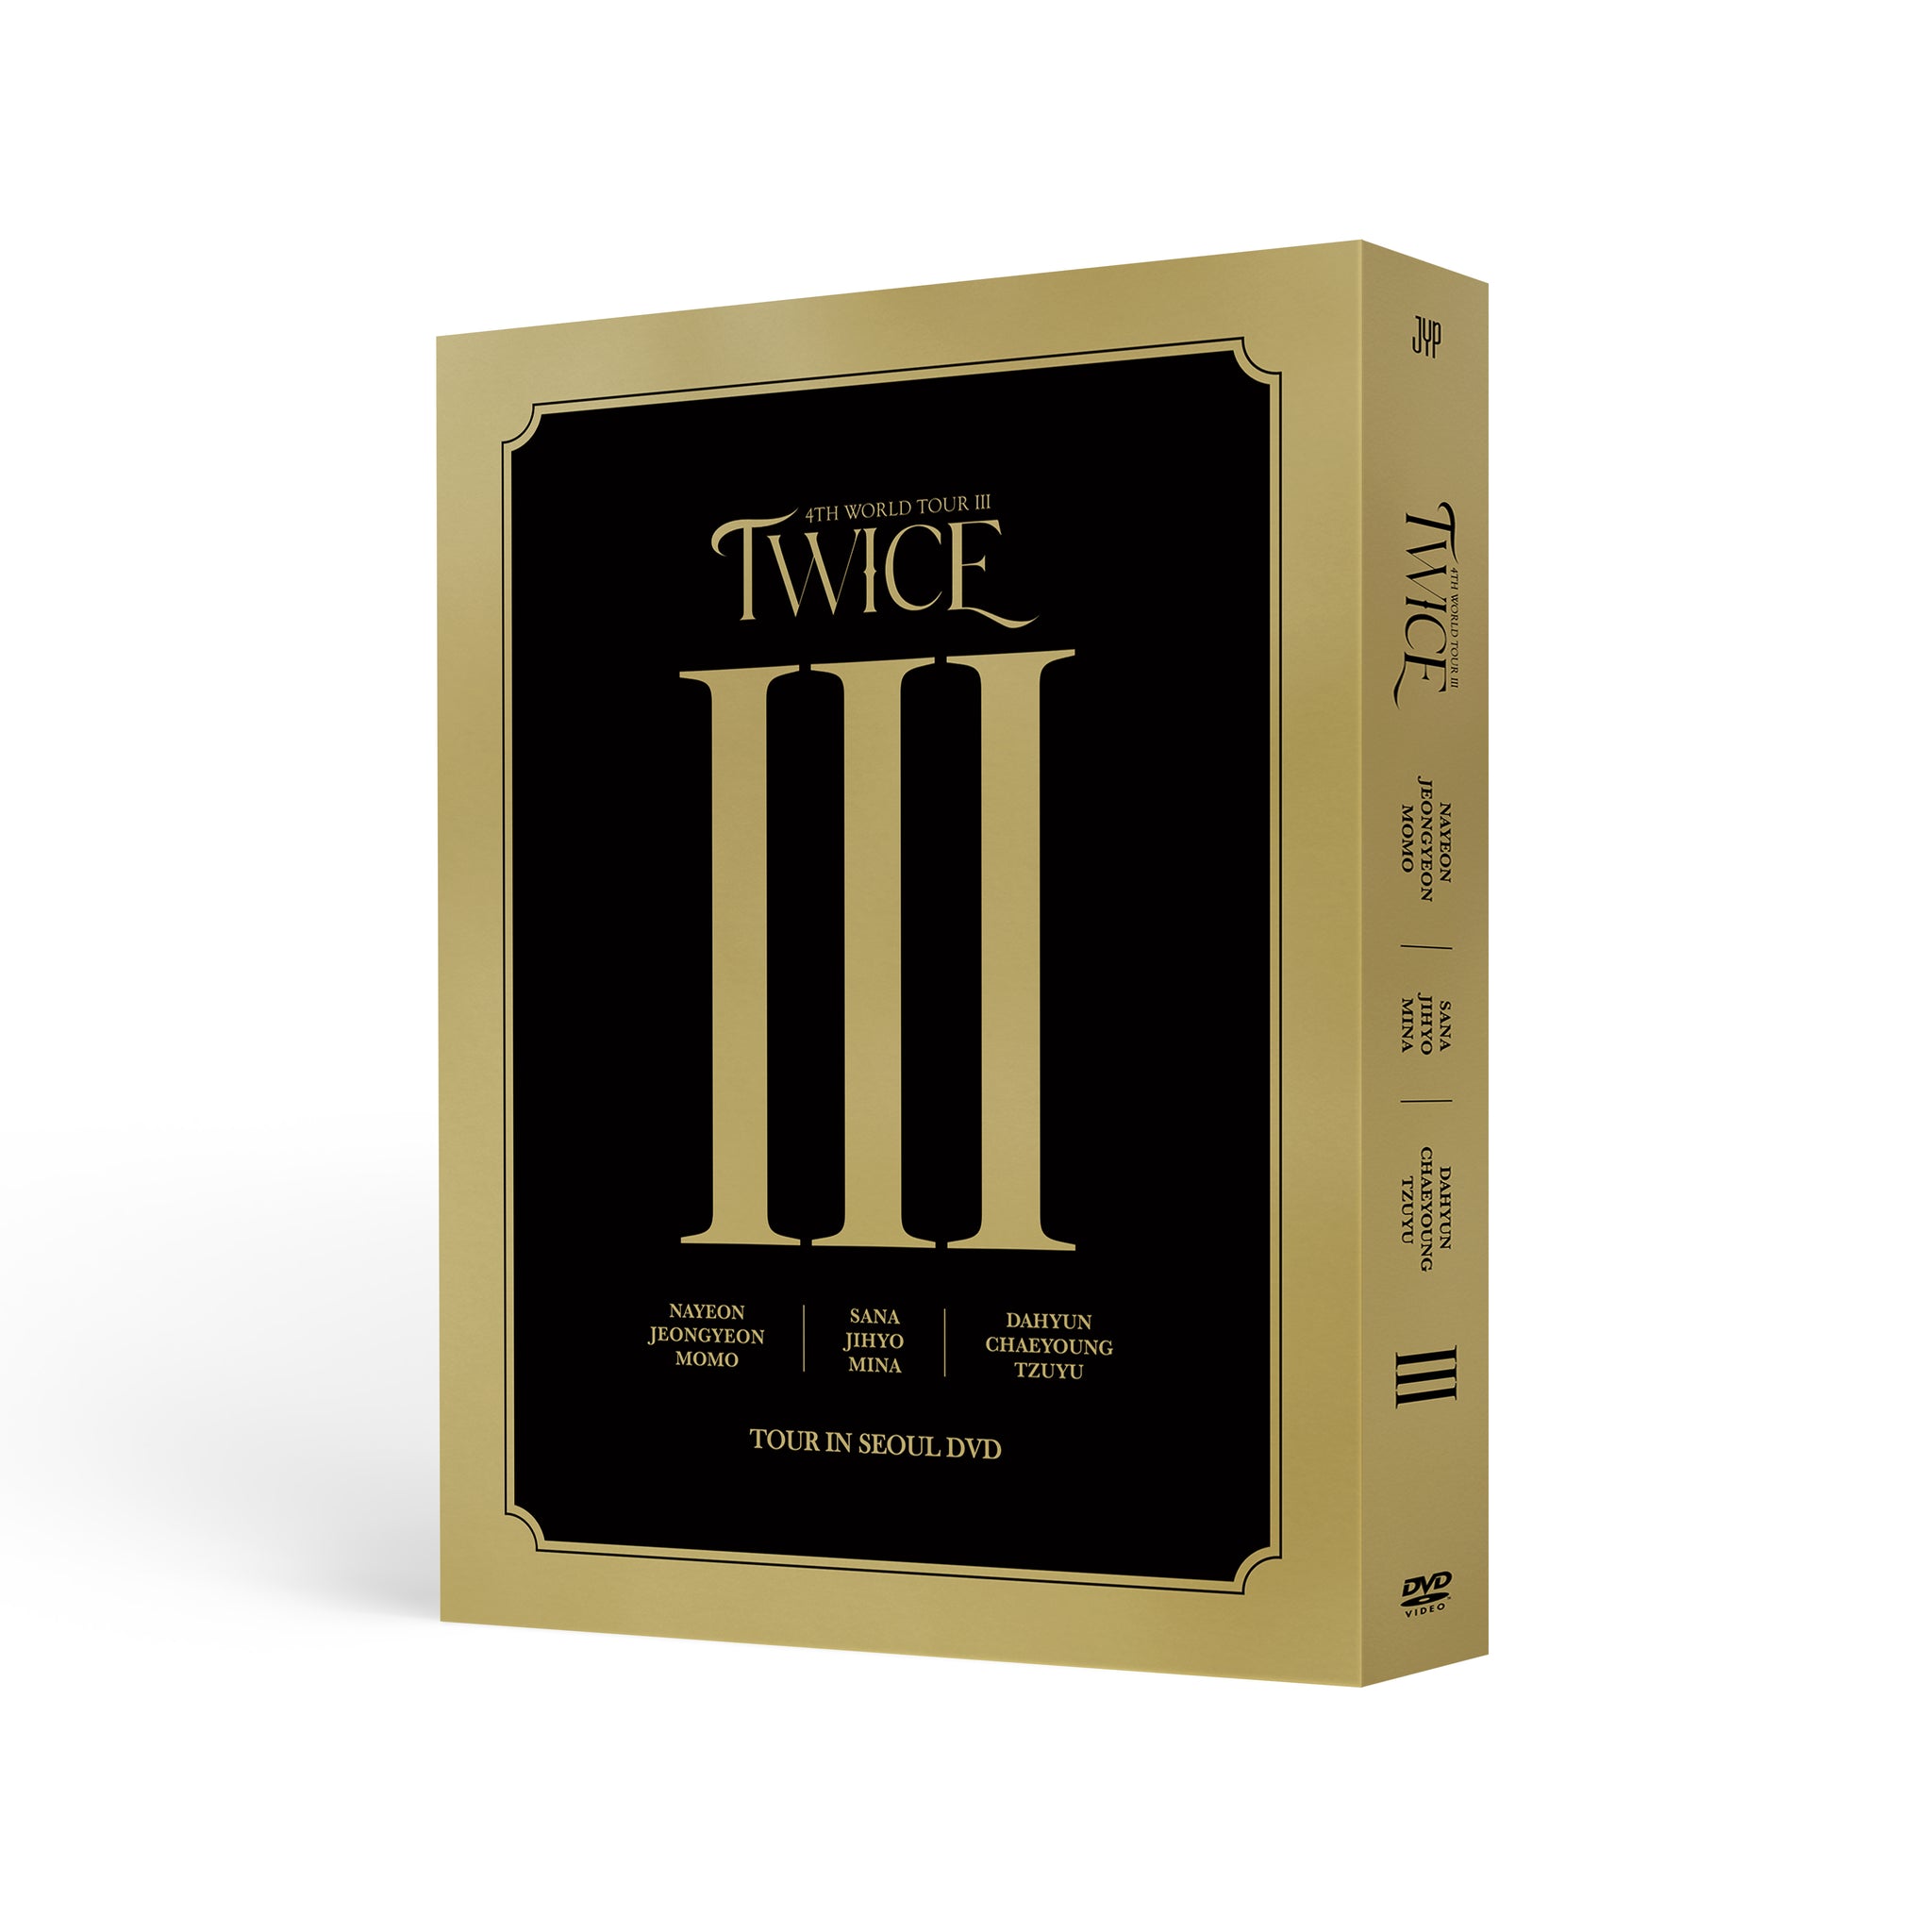 TWICE '4TH WORLD TOUR III IN SEOUL' DVD COVER